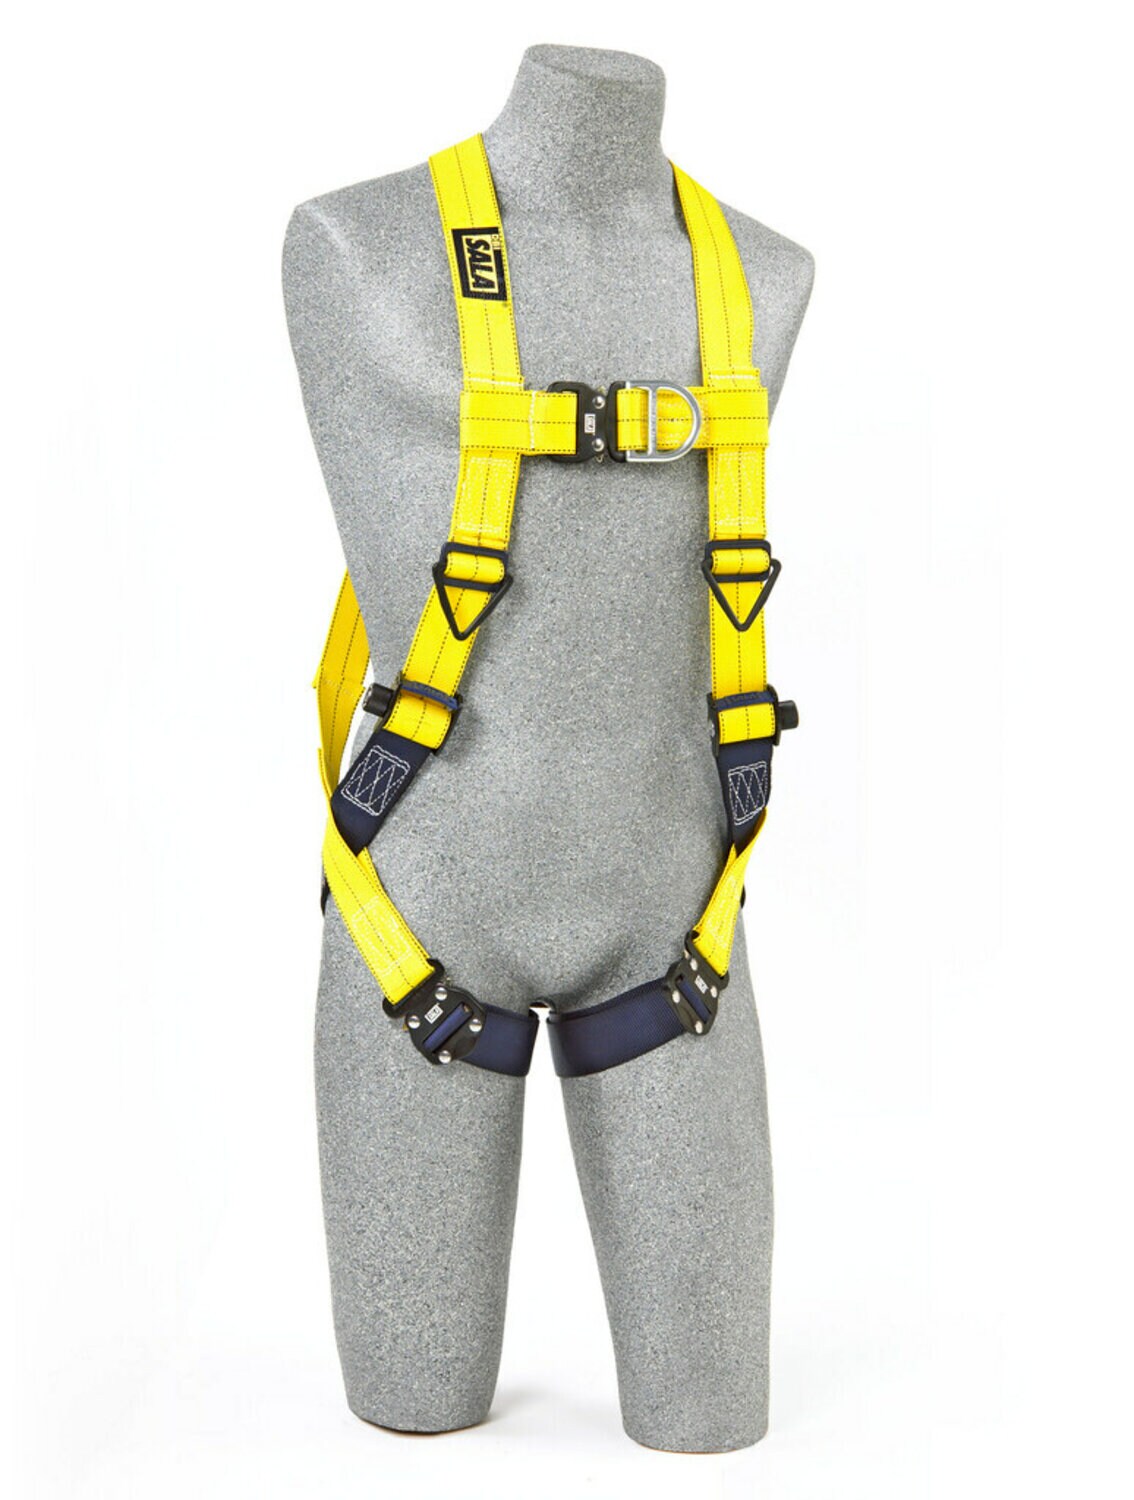 7012815345 - 3M DBI-SALA Delta Vest Climbing Safety Harness 1102093, 3X